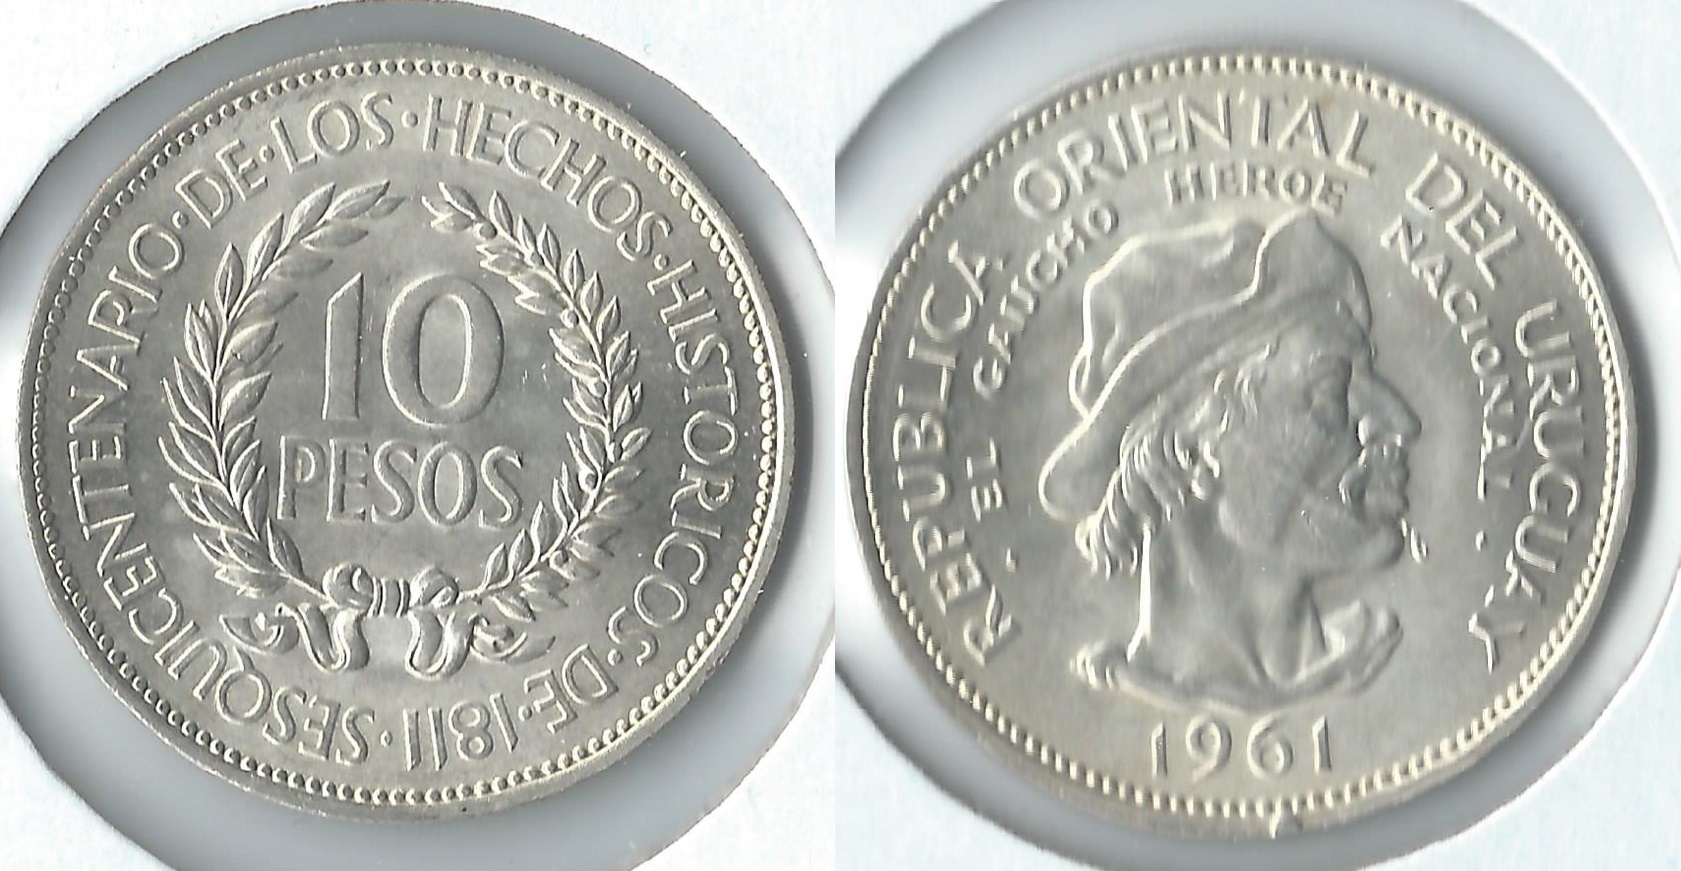 1961 uruguay 10 pesos.jpg